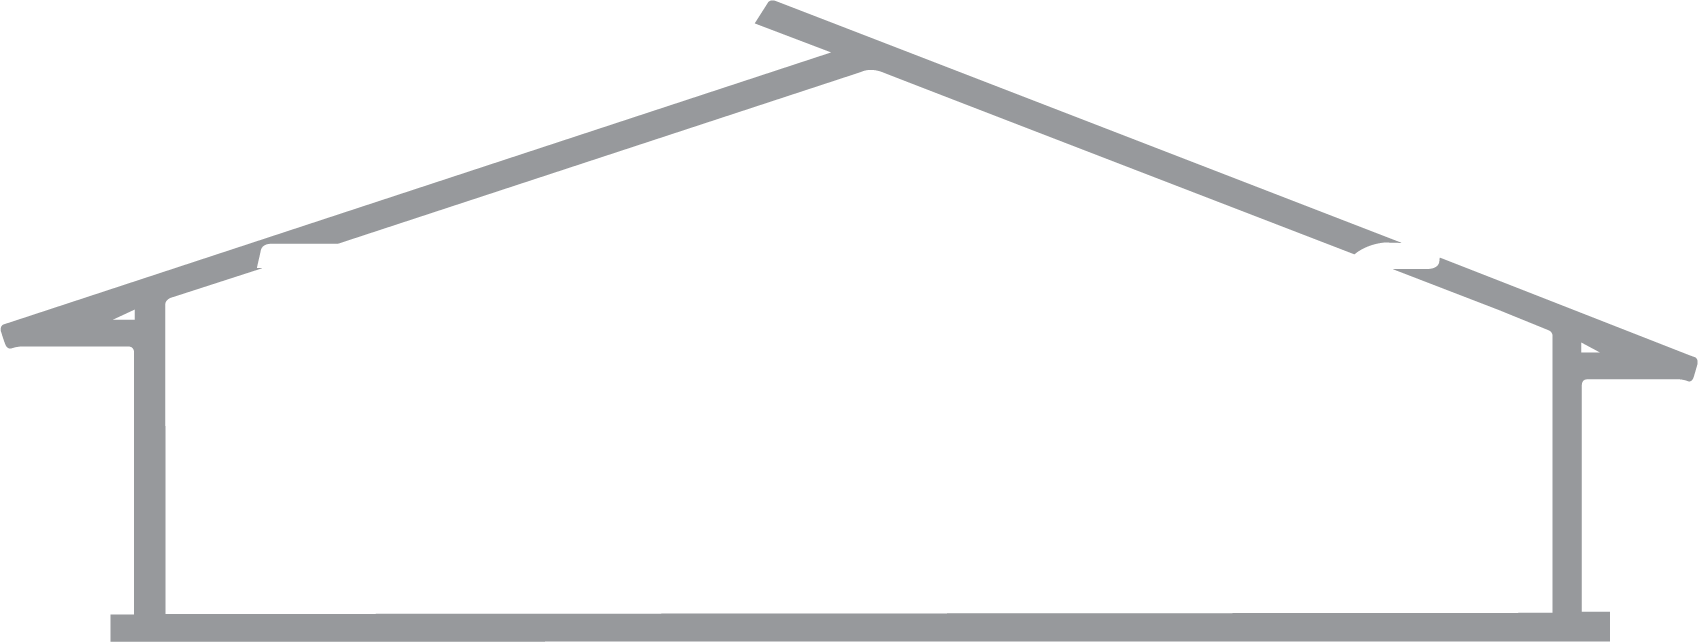 Tom Redding Constructions logo